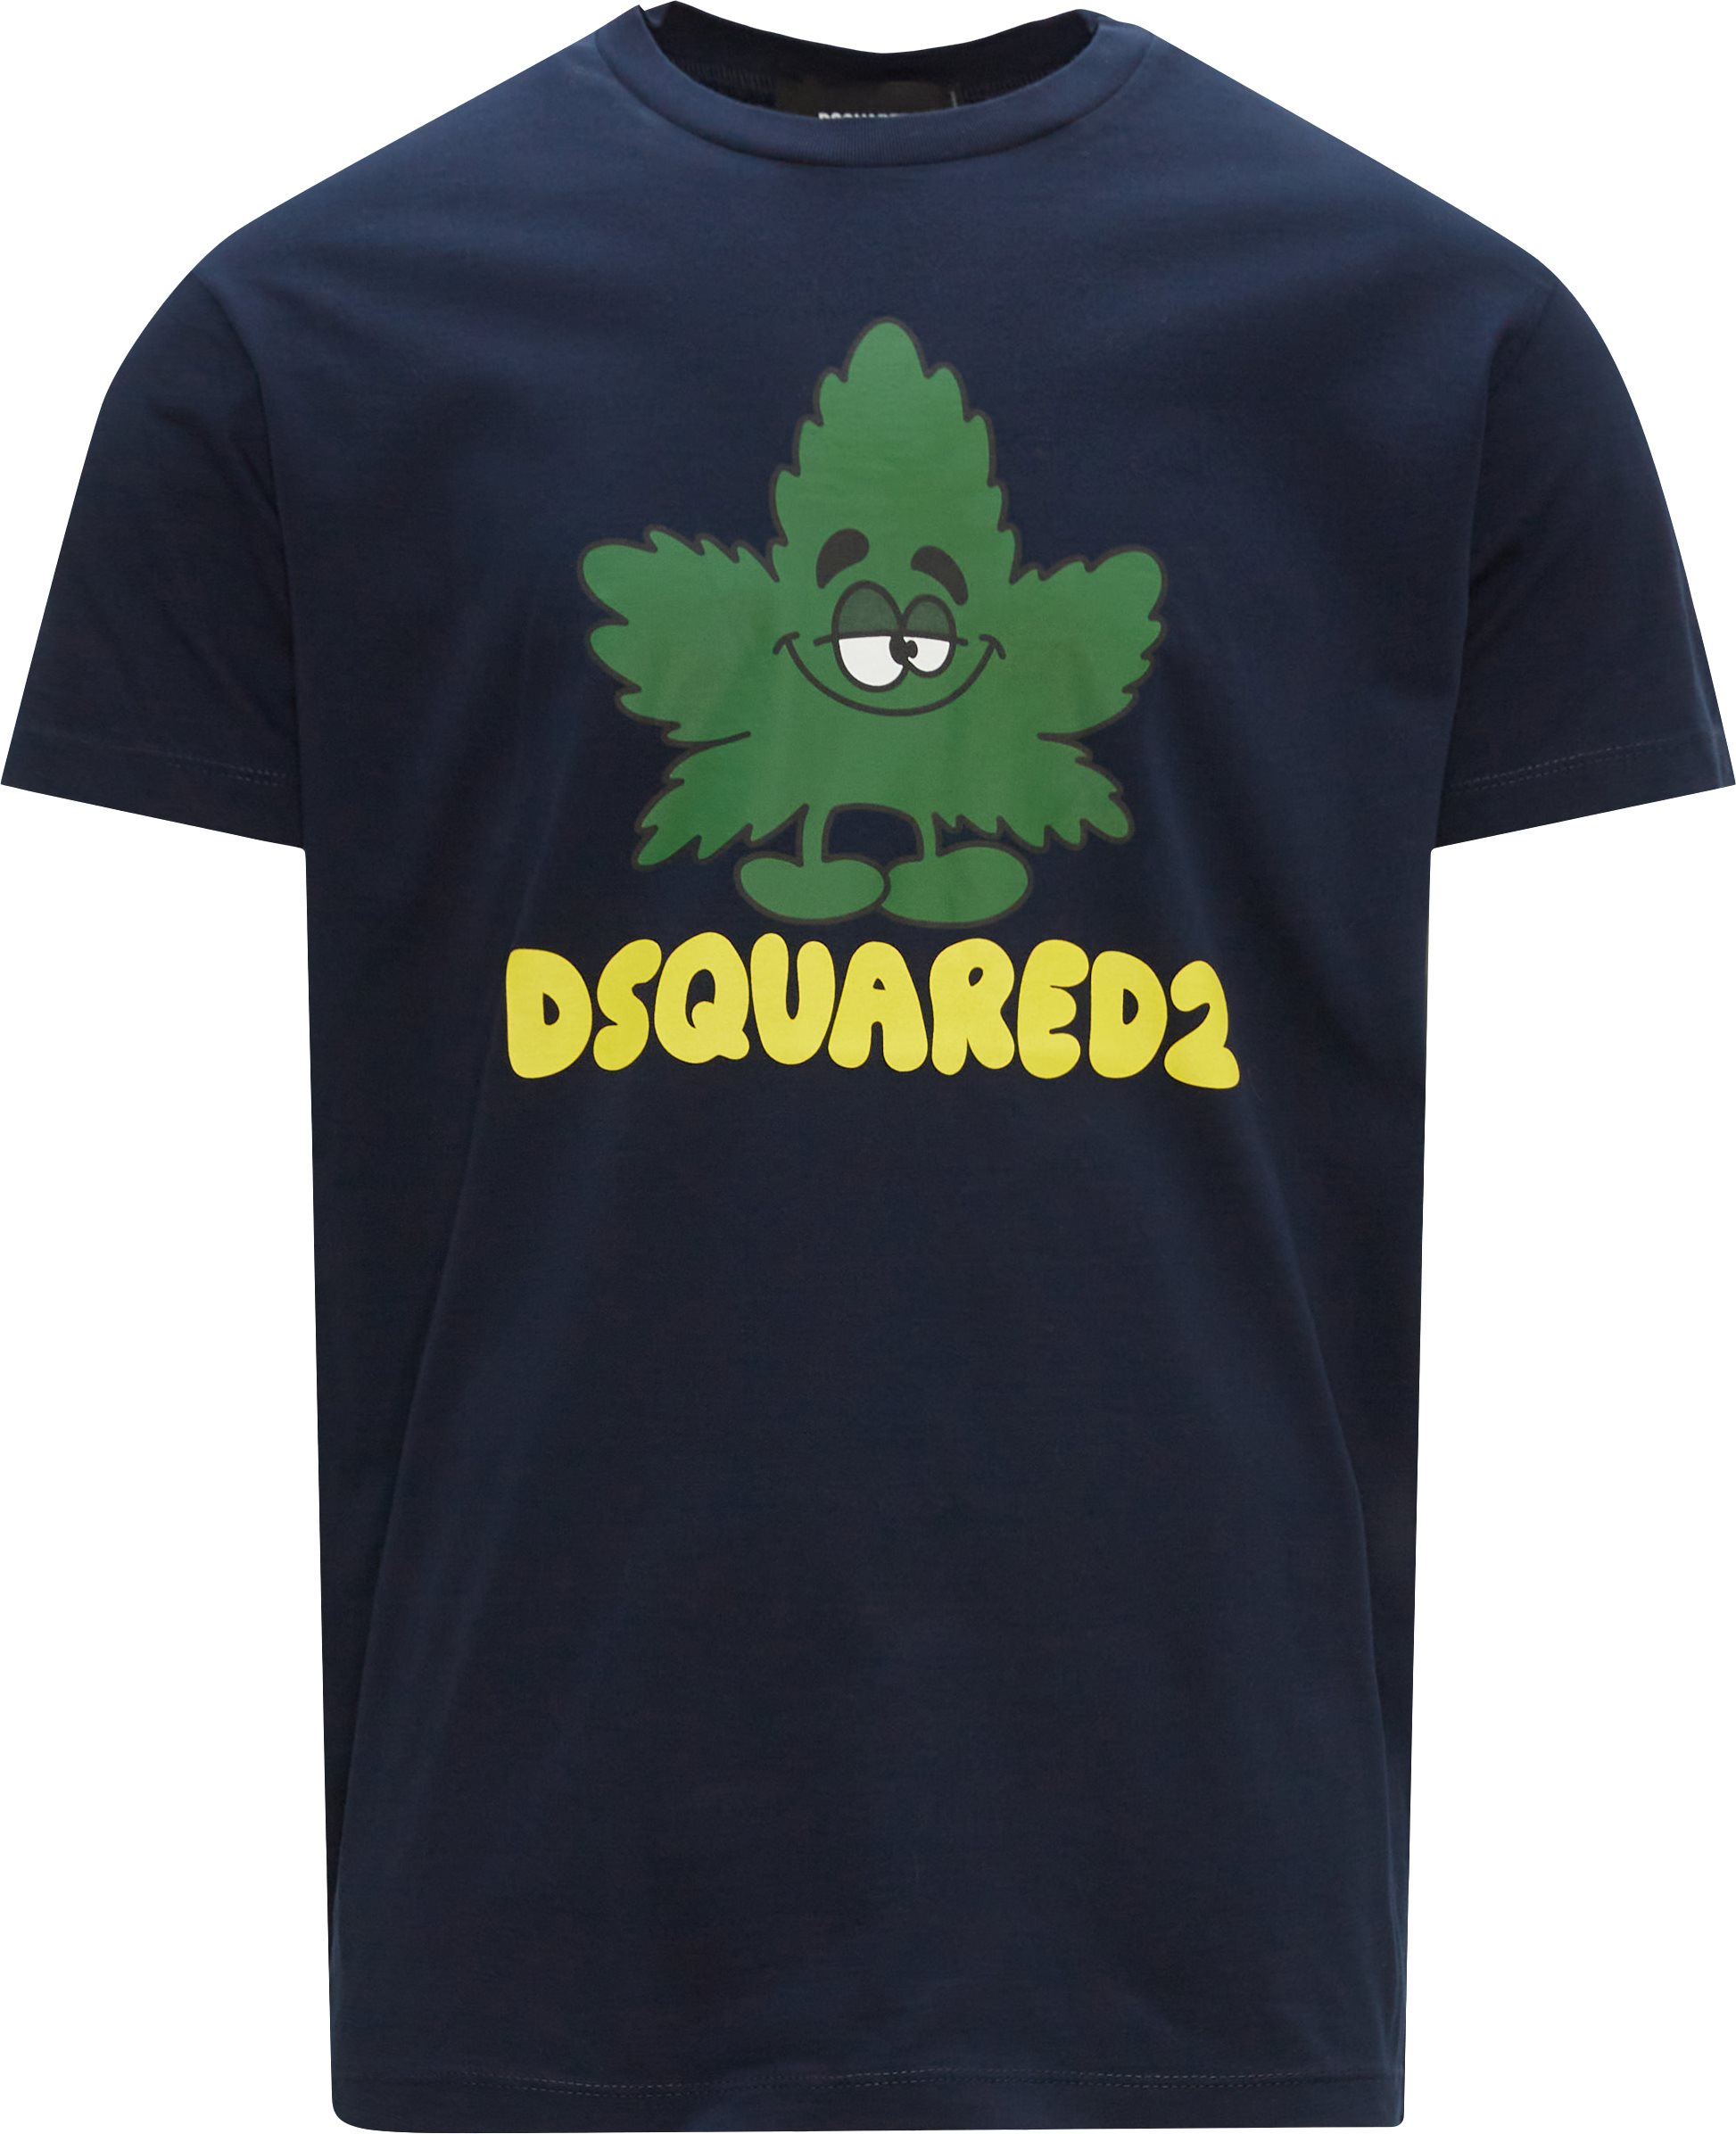 Dsquared2 T-shirts S71GD1279 S23009 Blue